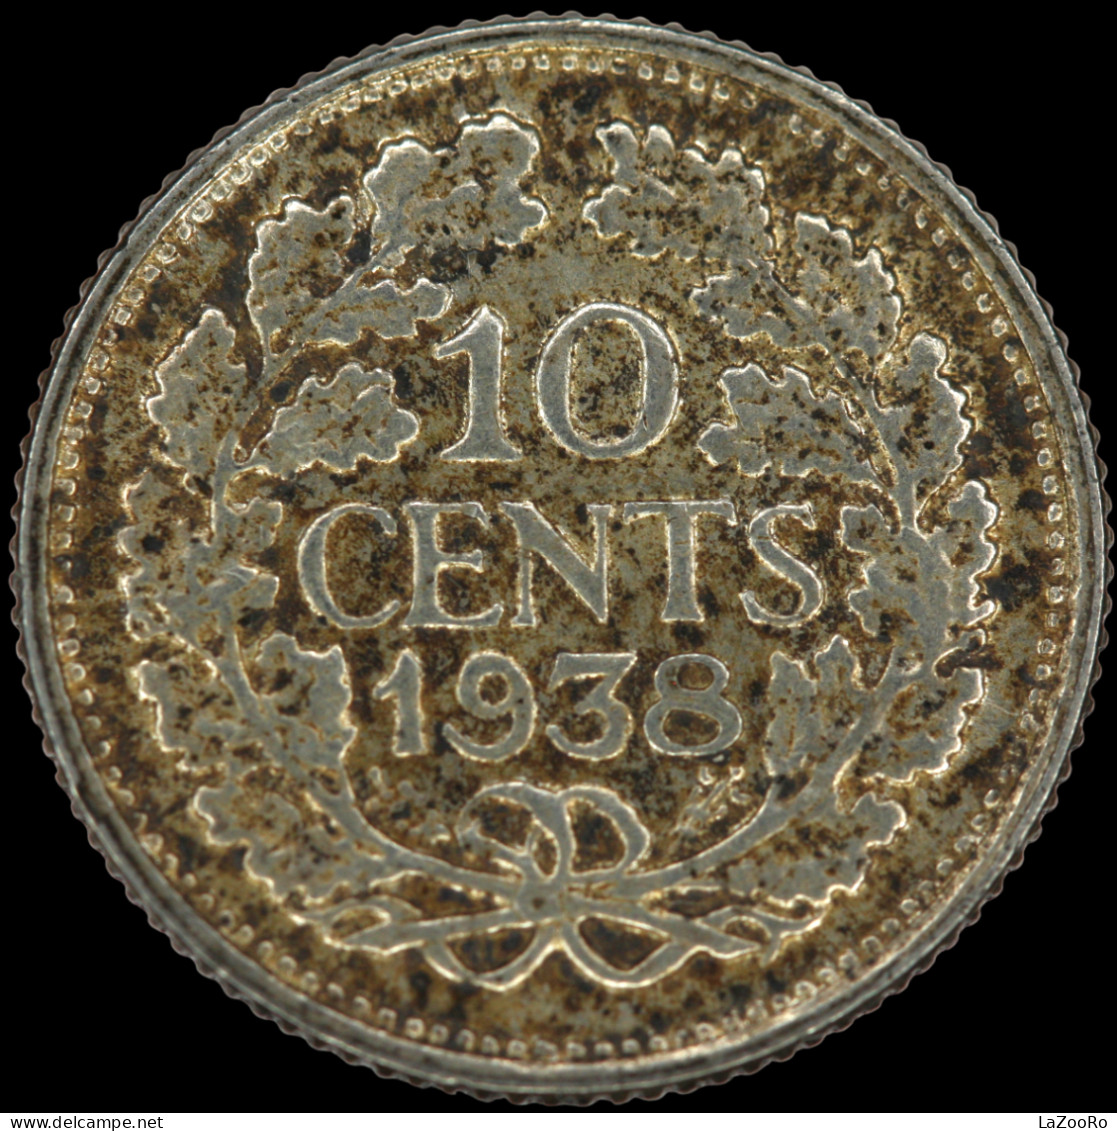 LaZooRo: Netherlands 10 Cents 1938 UNC - Silver - 10 Cent